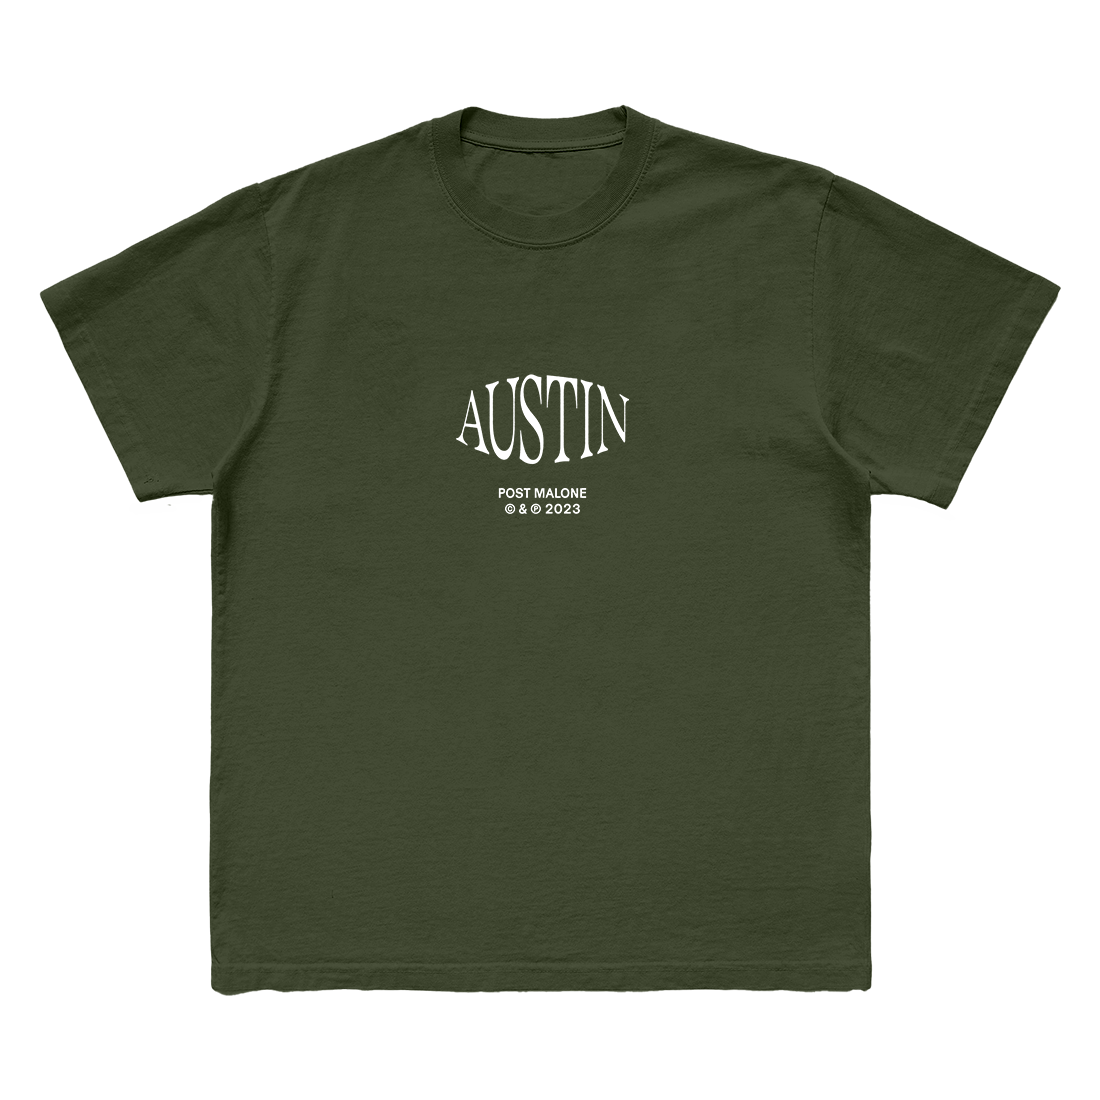 Post Malone - Austin Stage T-Shirt